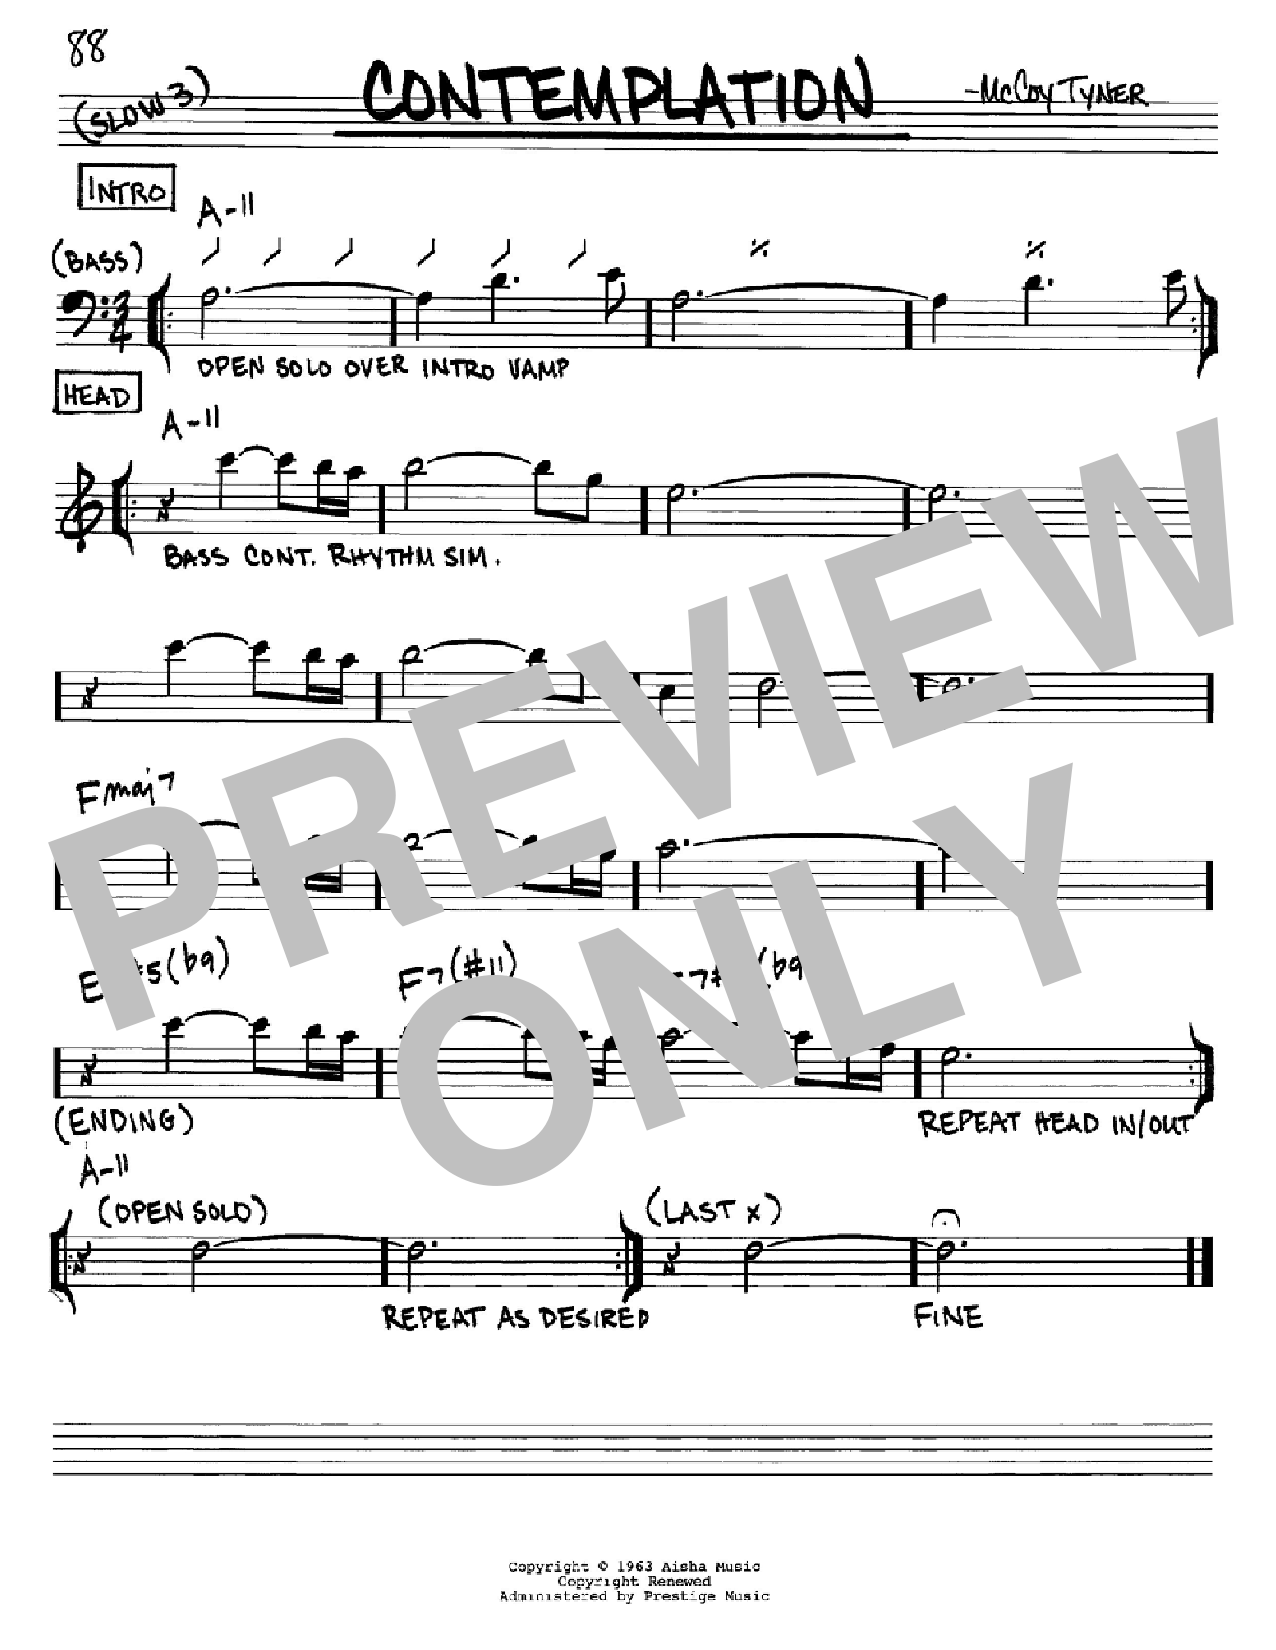 Download McCoy Tyner Contemplation Sheet Music